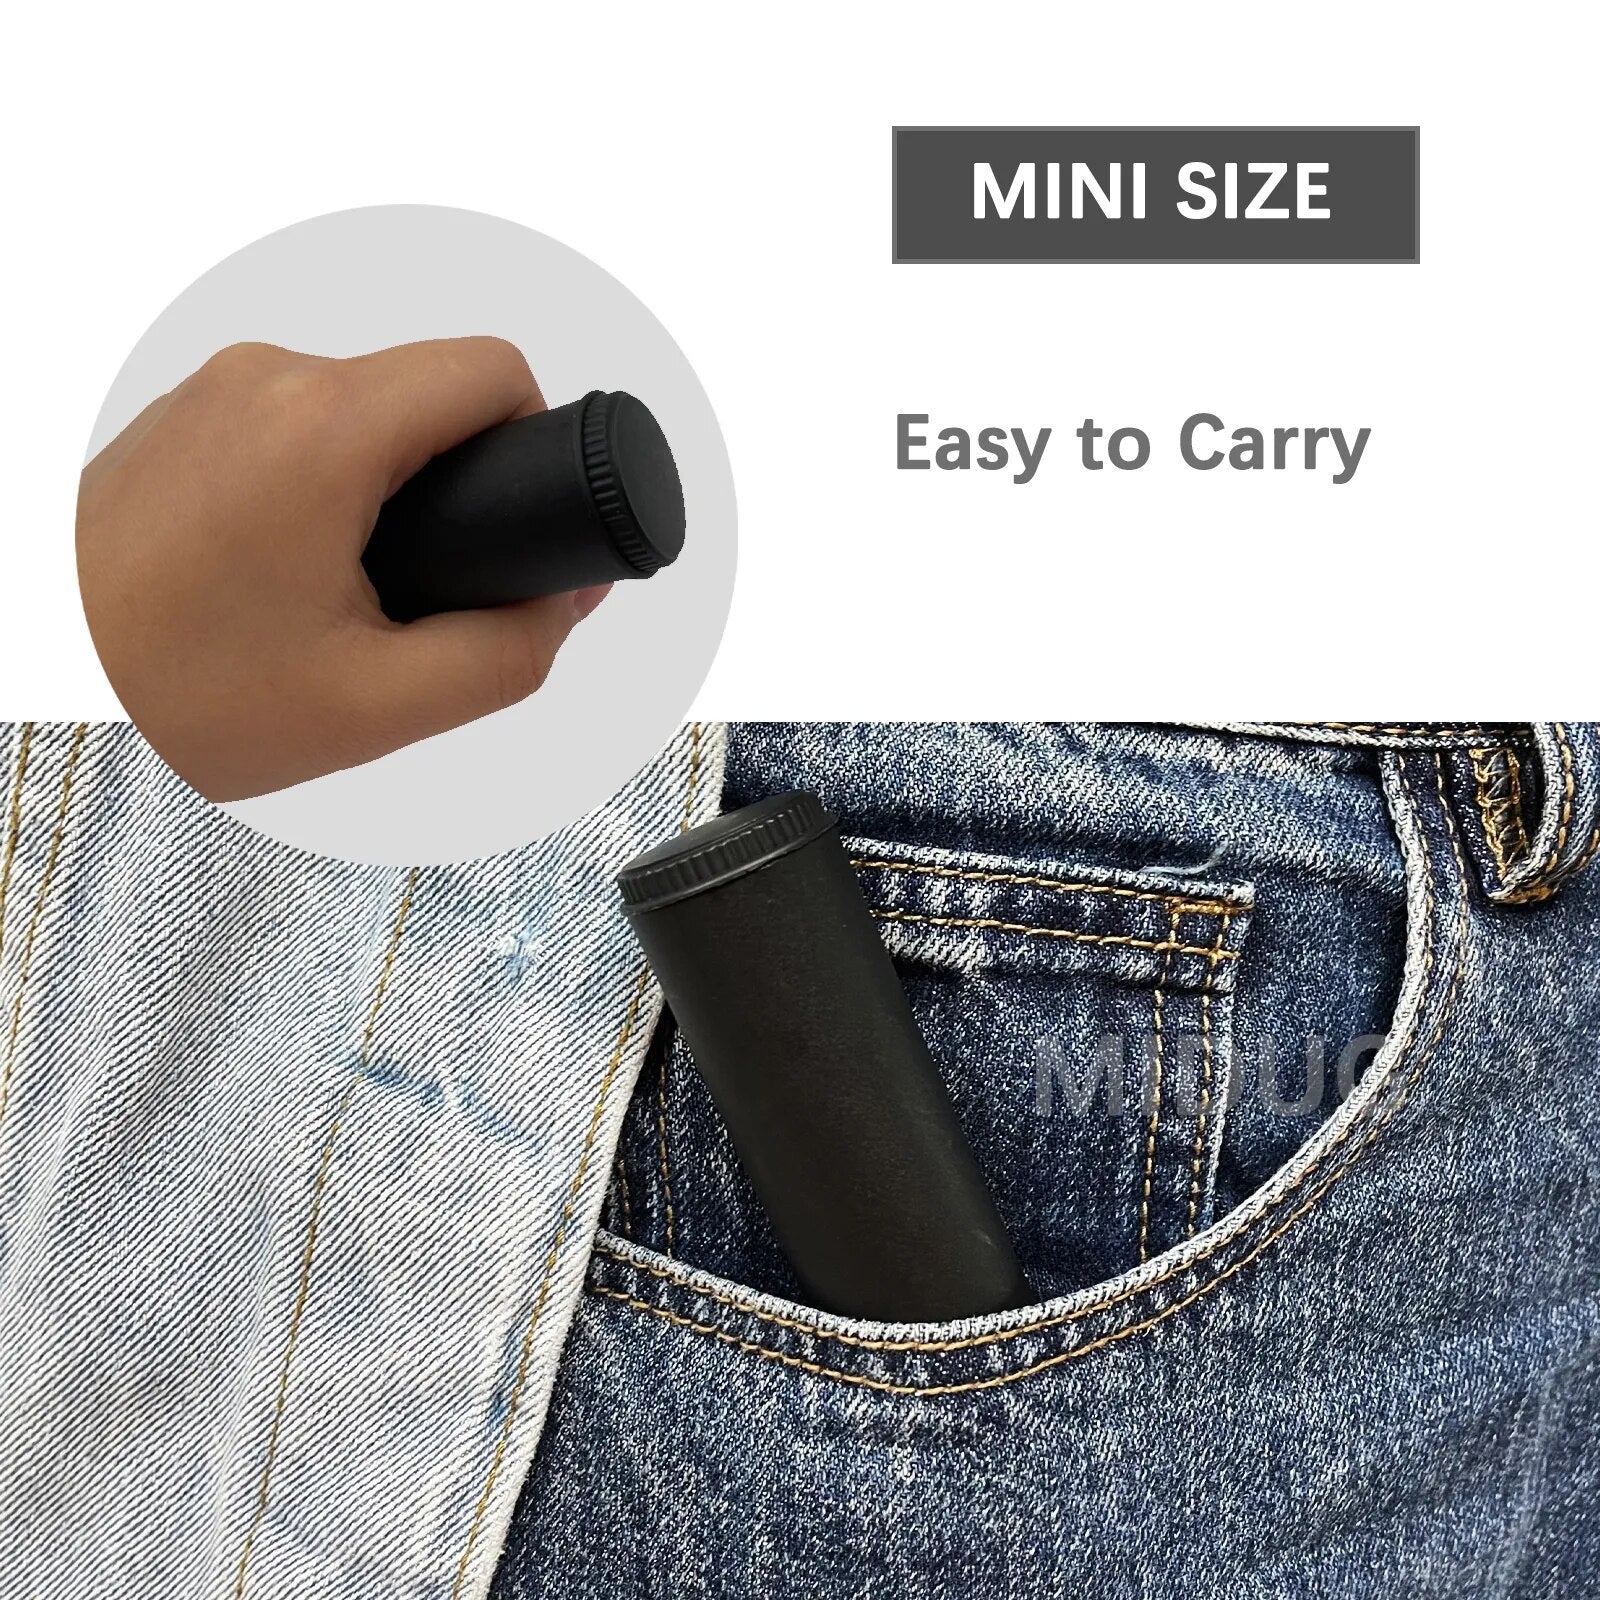 MIDUG Cleaning Kit Pocket Size for .38/,357/9mm Caliber